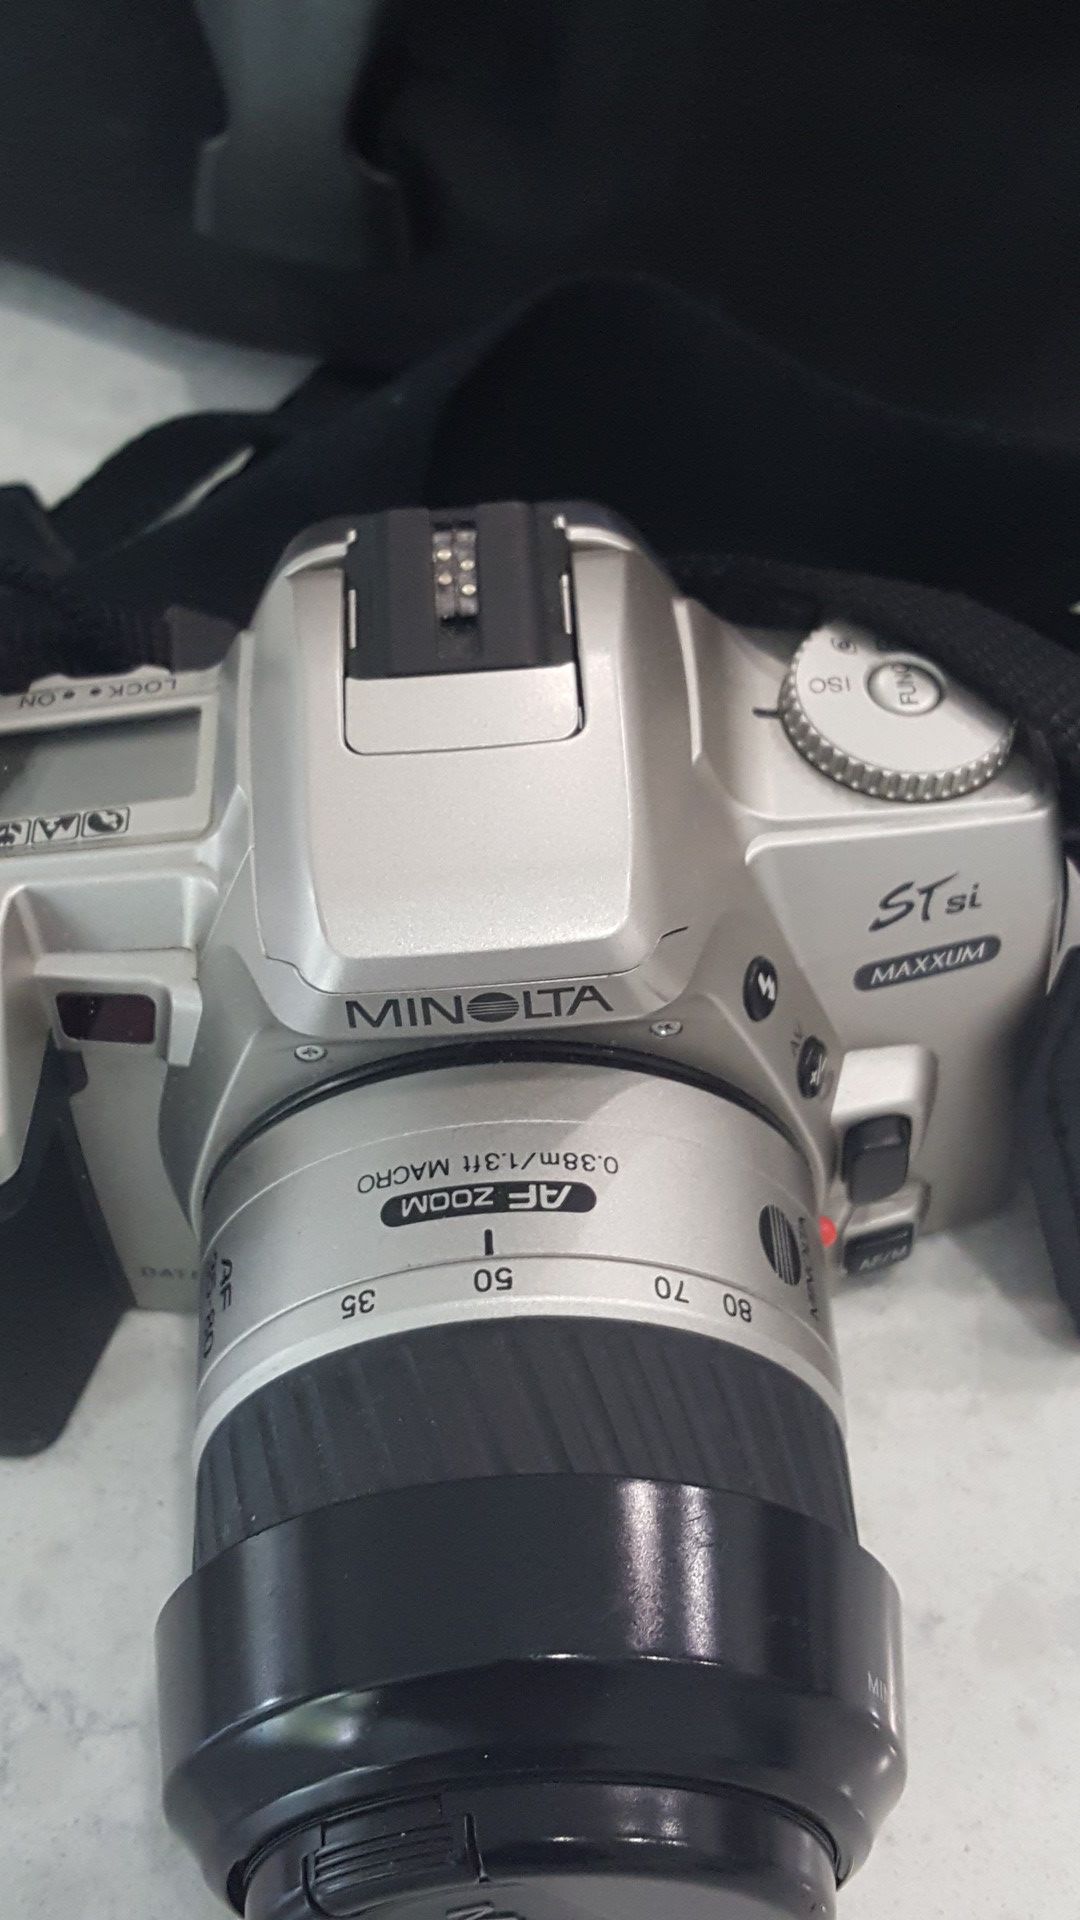 Minolta 35 mm with camera bag